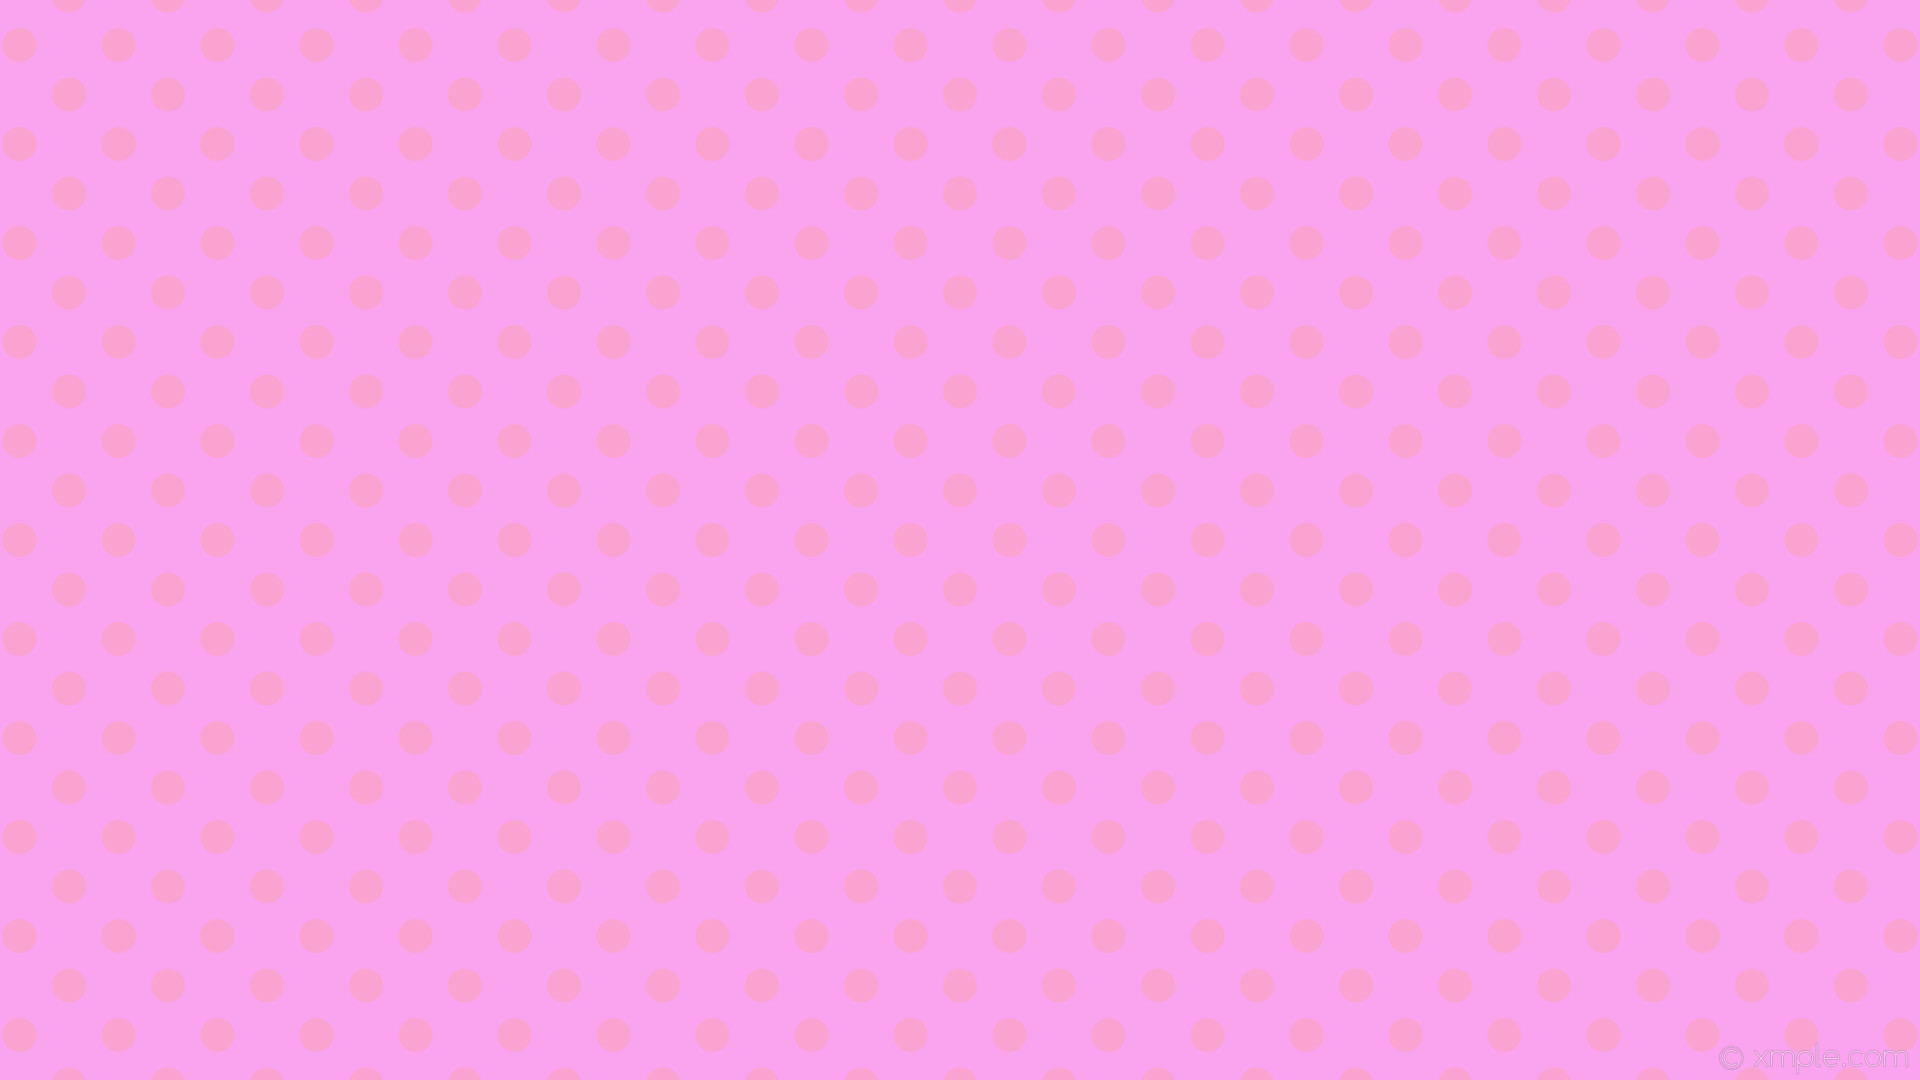 1920x1080 wallpaper magenta pink polka dots spots light magenta light pink #faa3ef  #faa3d0 315Â°